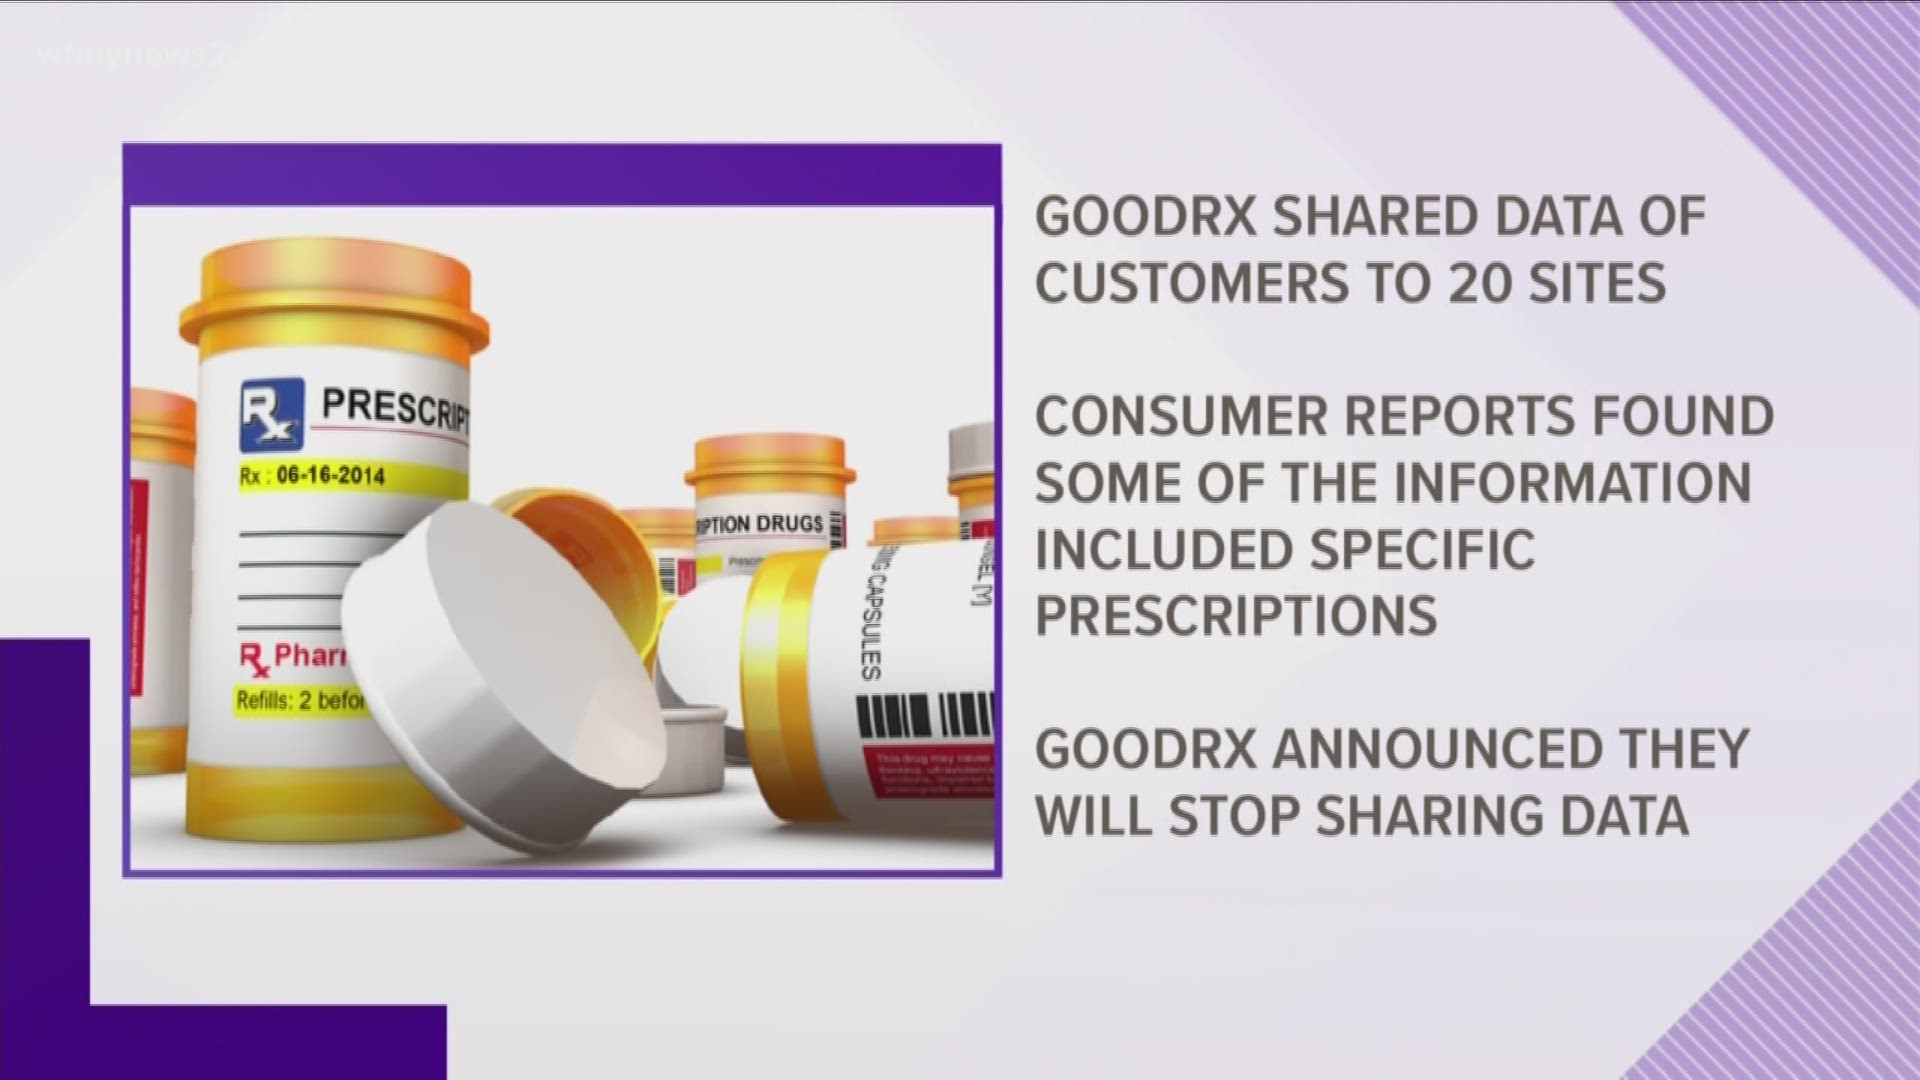 Consumer Reports found the company was even sharing prescription information.